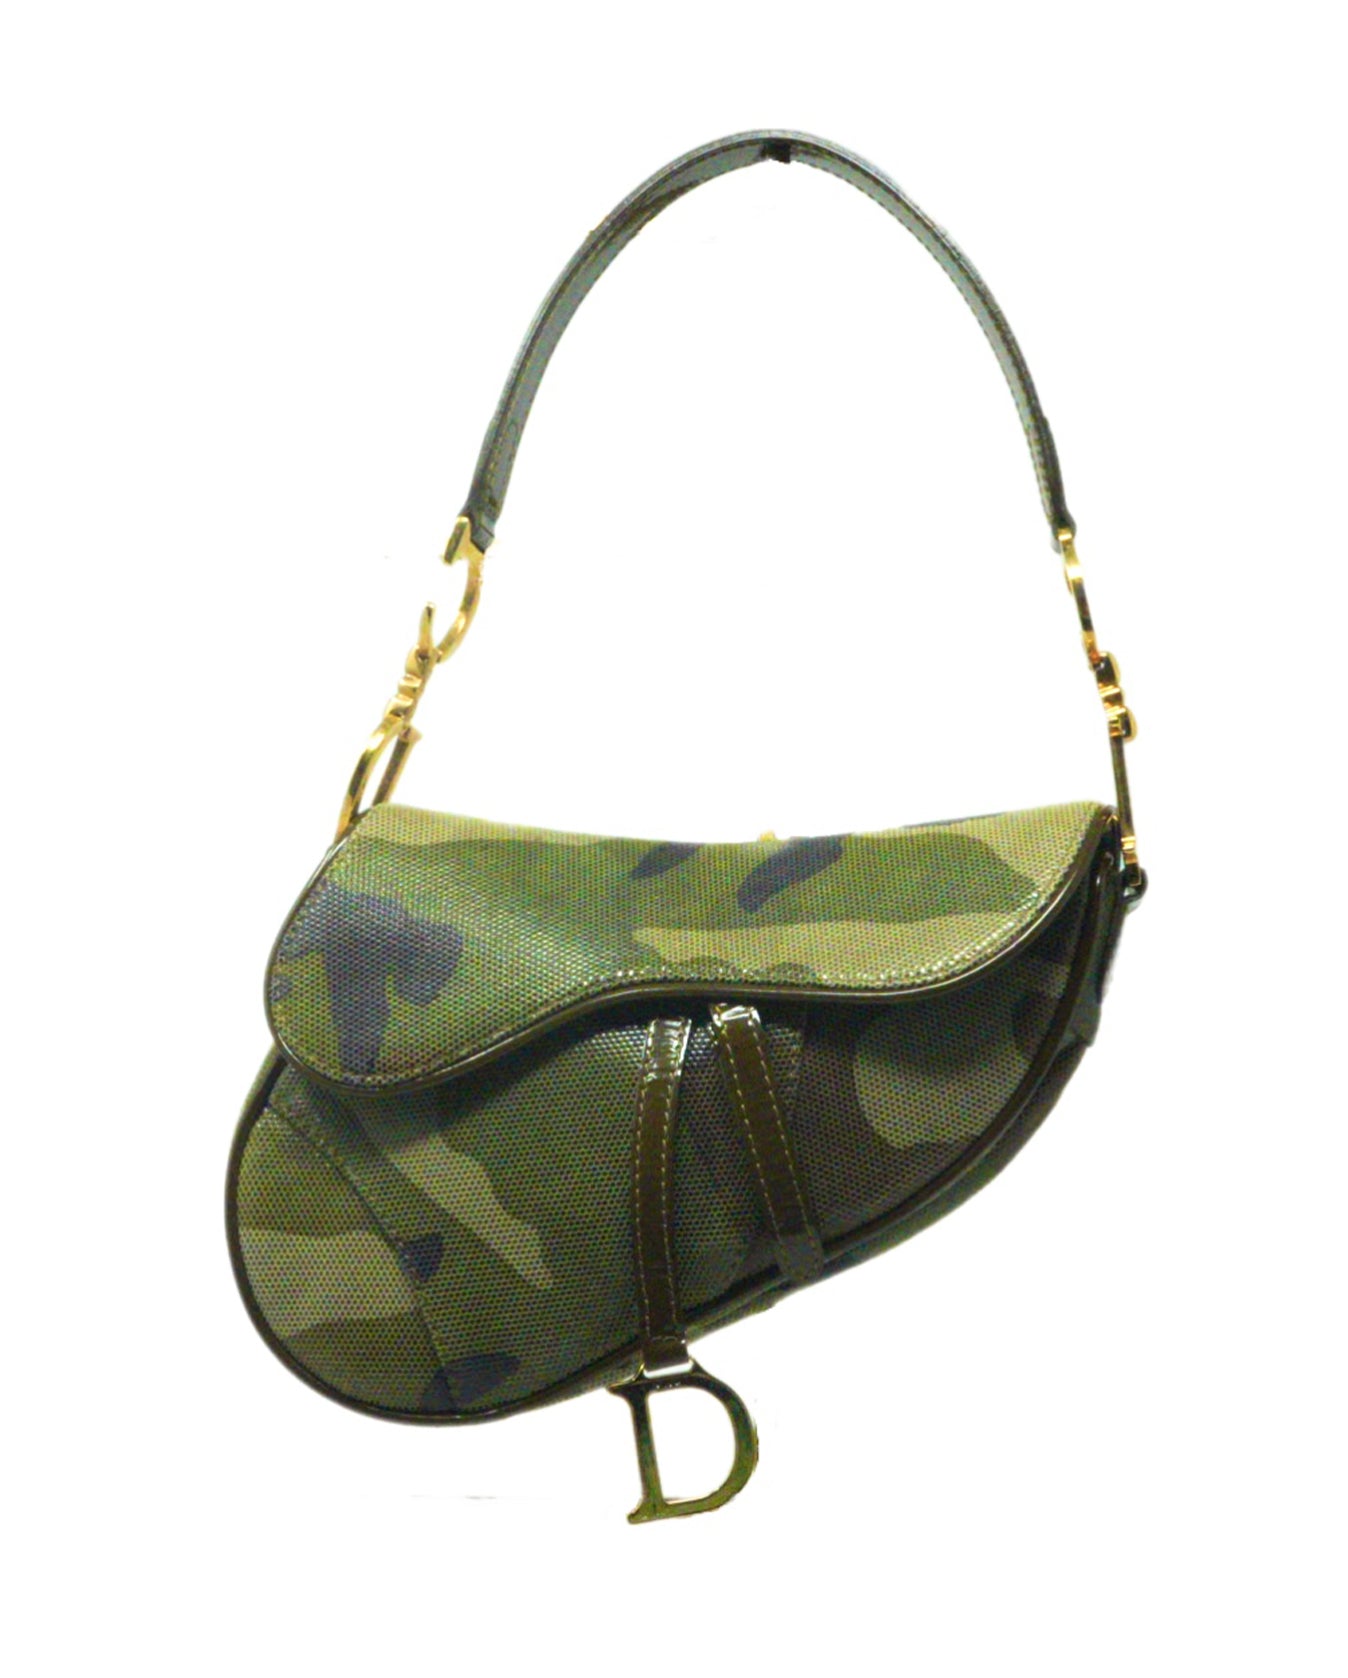 Found by Fred Segal - Women's Louis Vuitton Viva Cite GM Shoulder Bag | Color: Brown | Size: 8 x 13